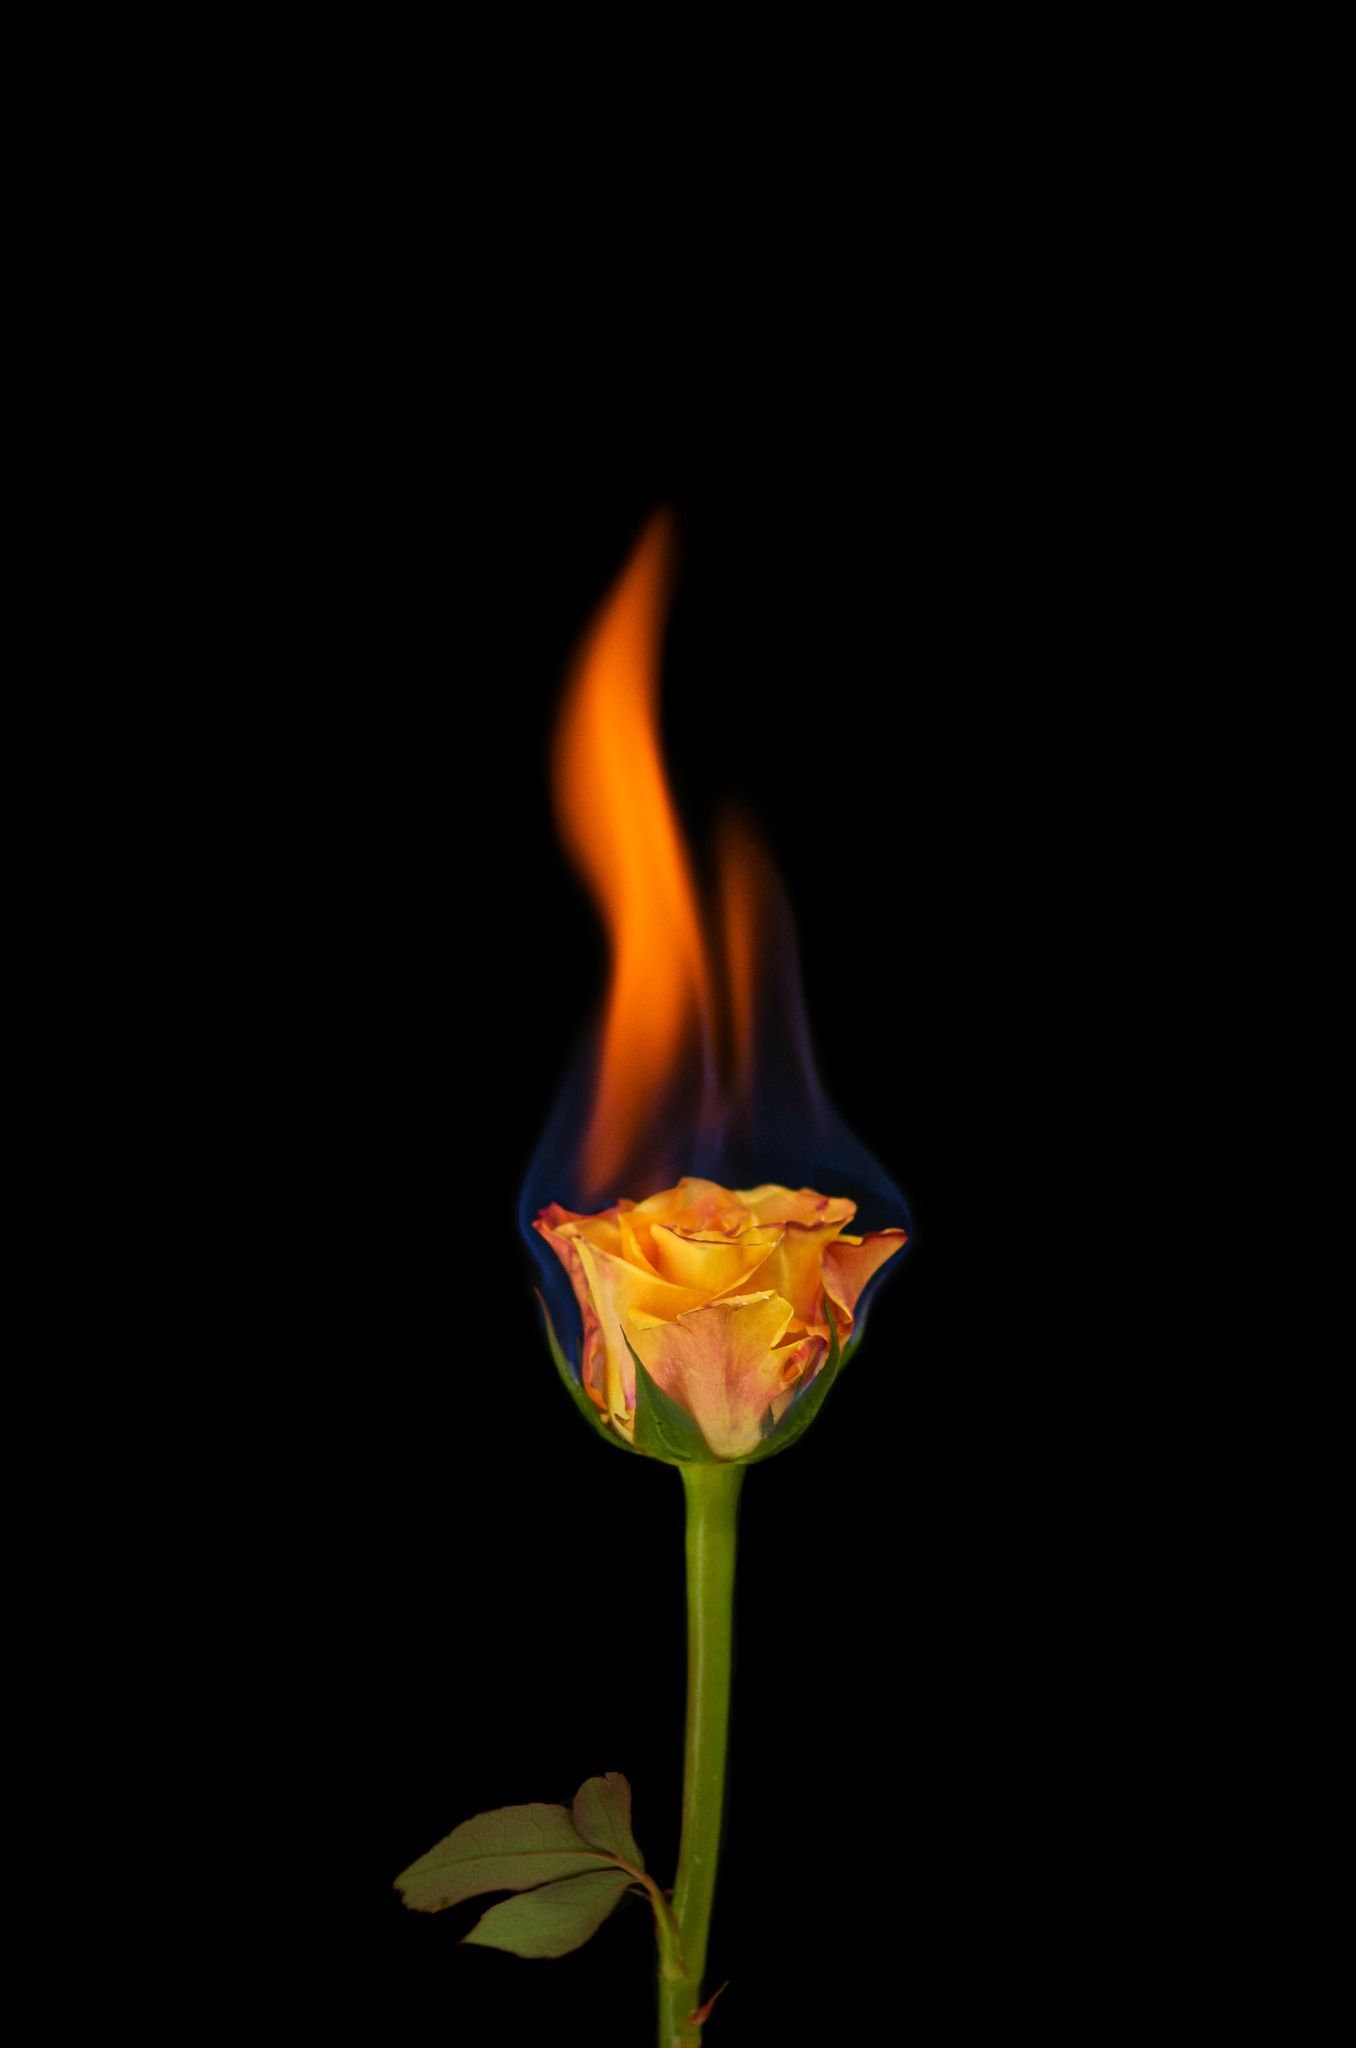 Rose on fire ideas. rose on fire, rose wallpaper, flower phone wallpaper